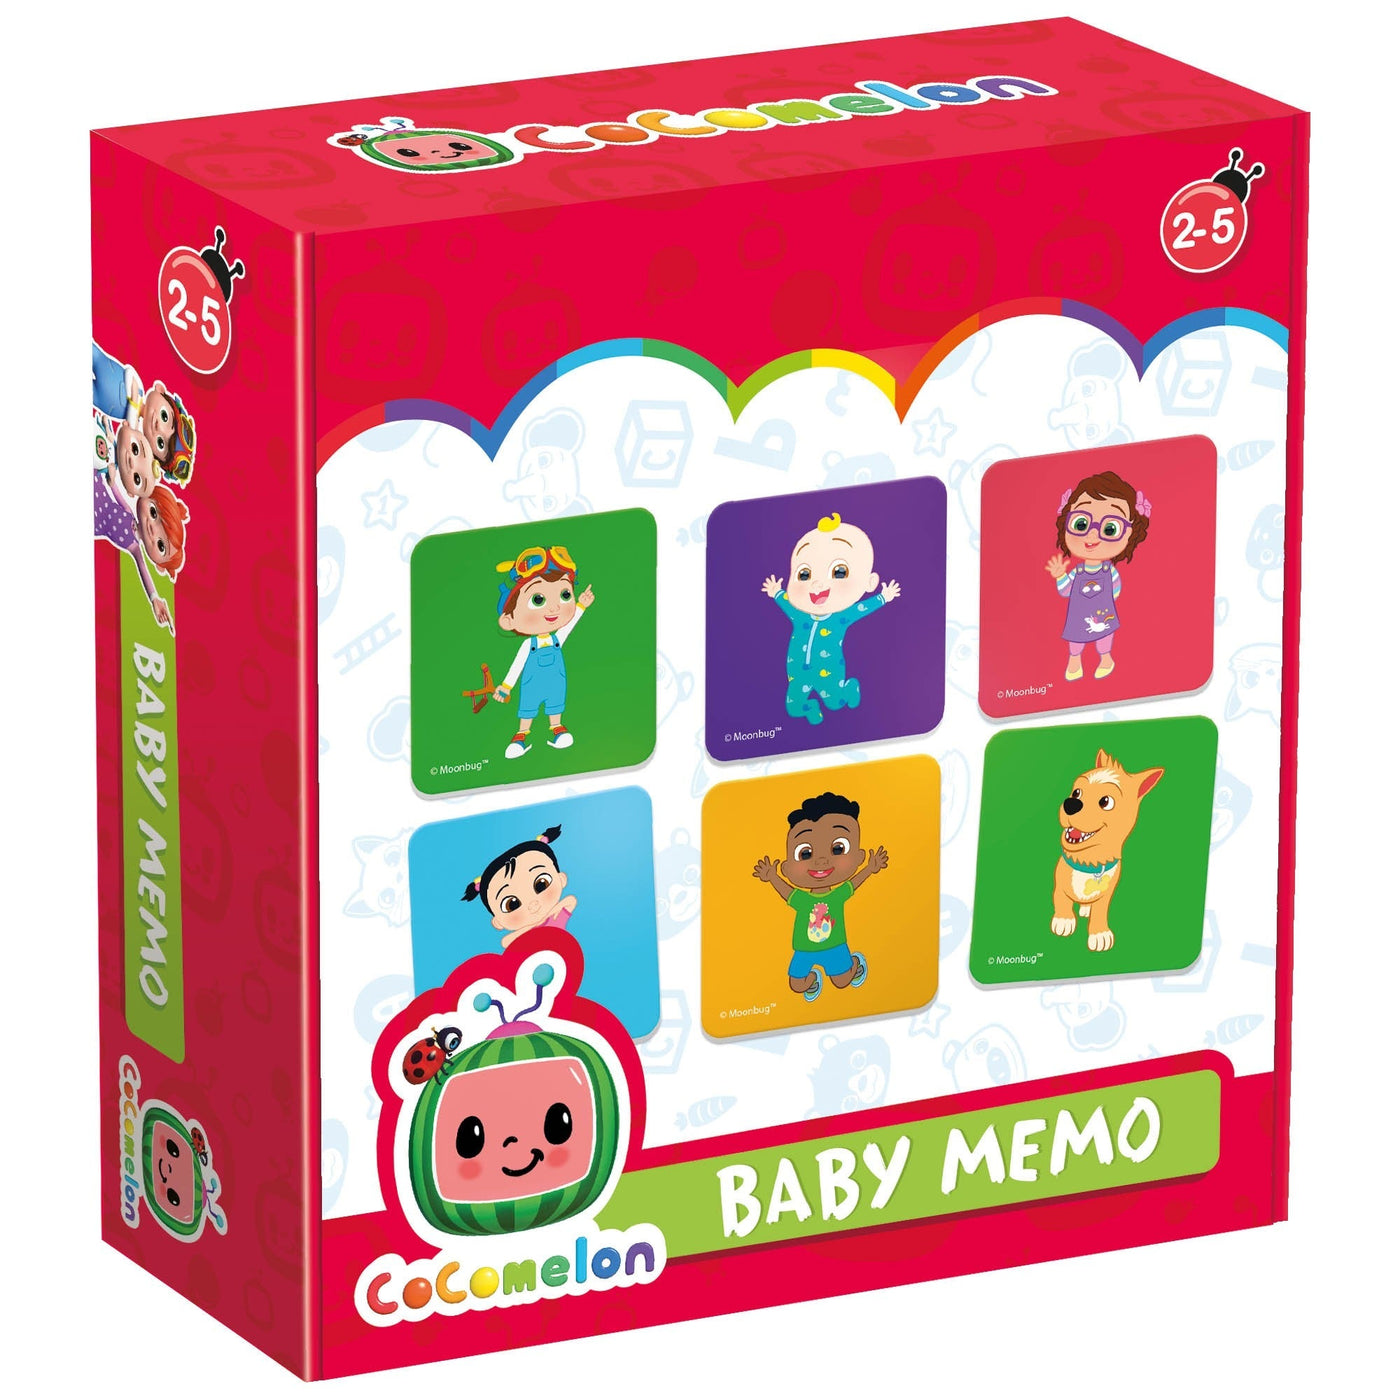 Cocomelon - Baby Memo - Memory Educational Game